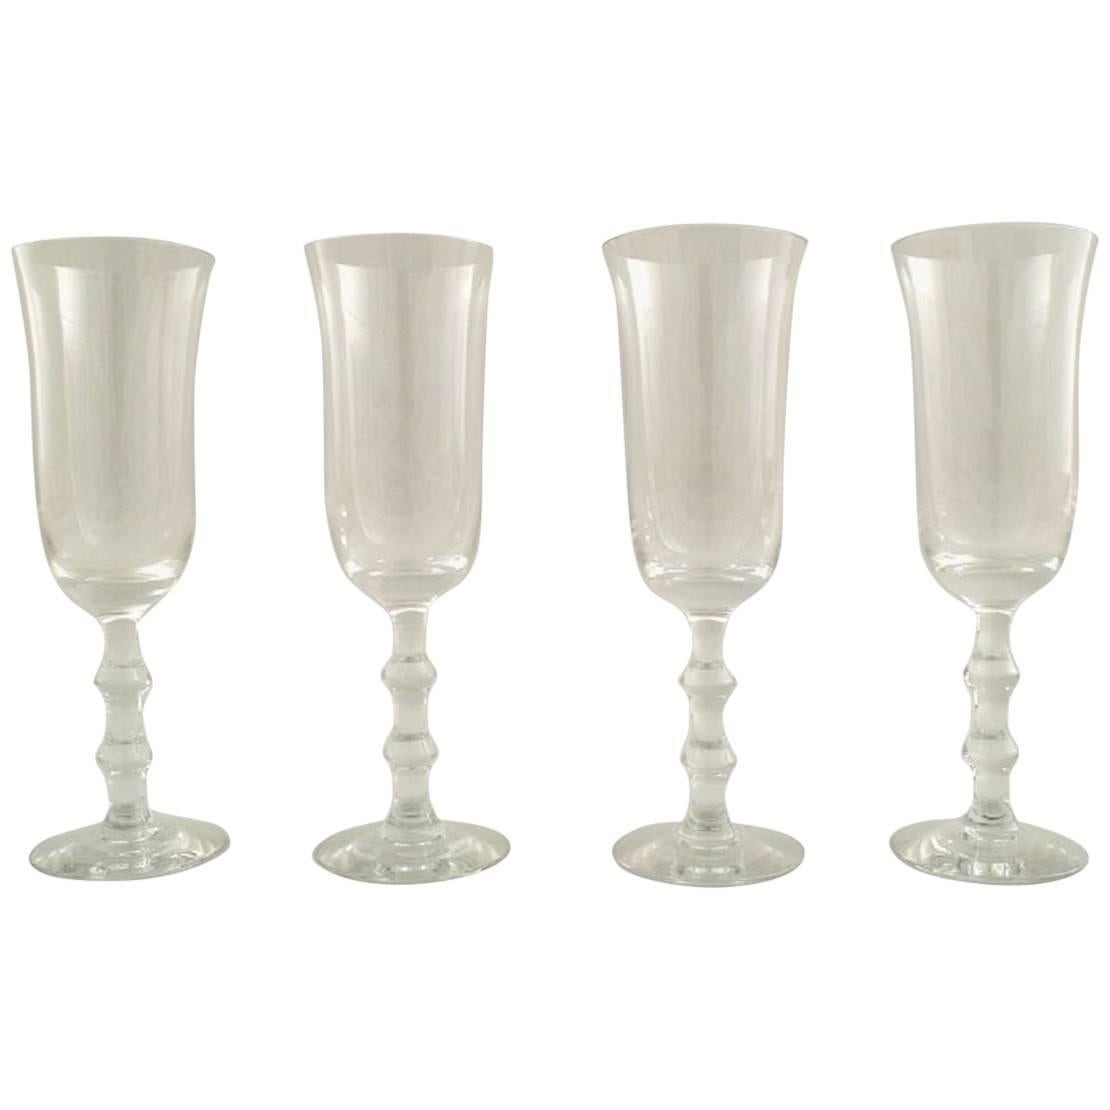 Simon Gate for Orrefors, a Set of Four Champagne Art Glasses